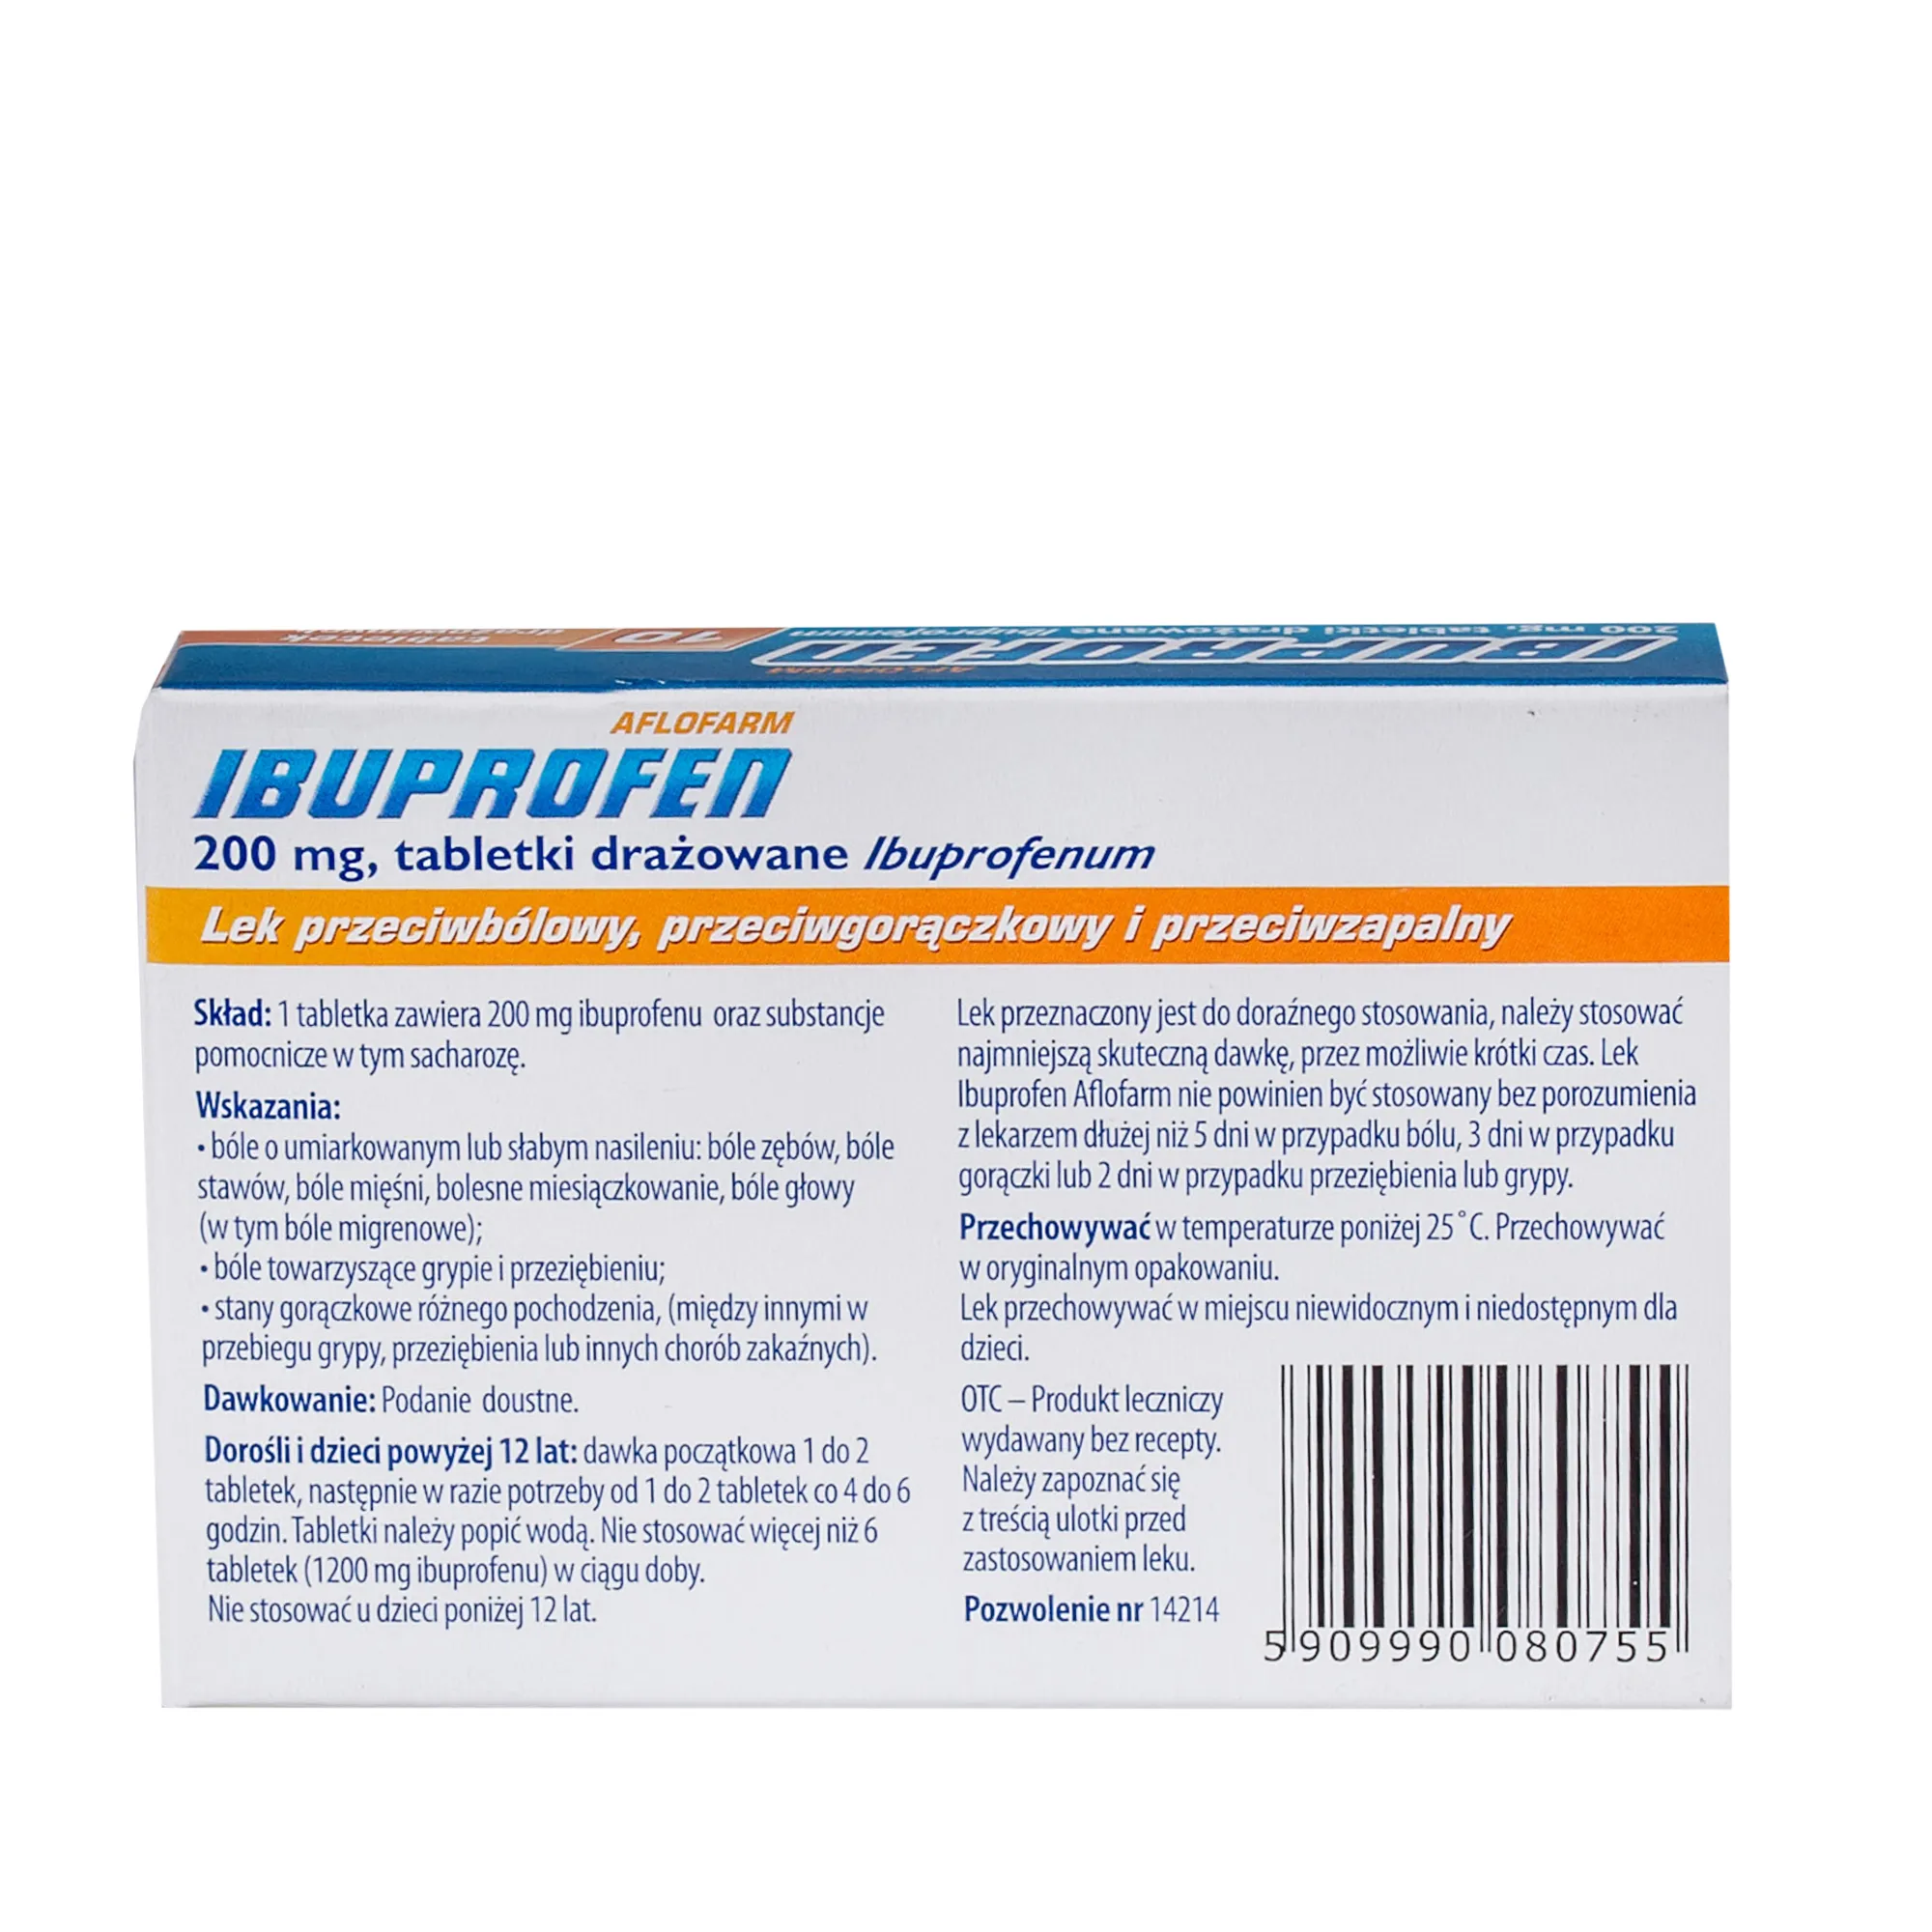 Ibuprofen Aflofarm, 200 mg, 10 tabletek 